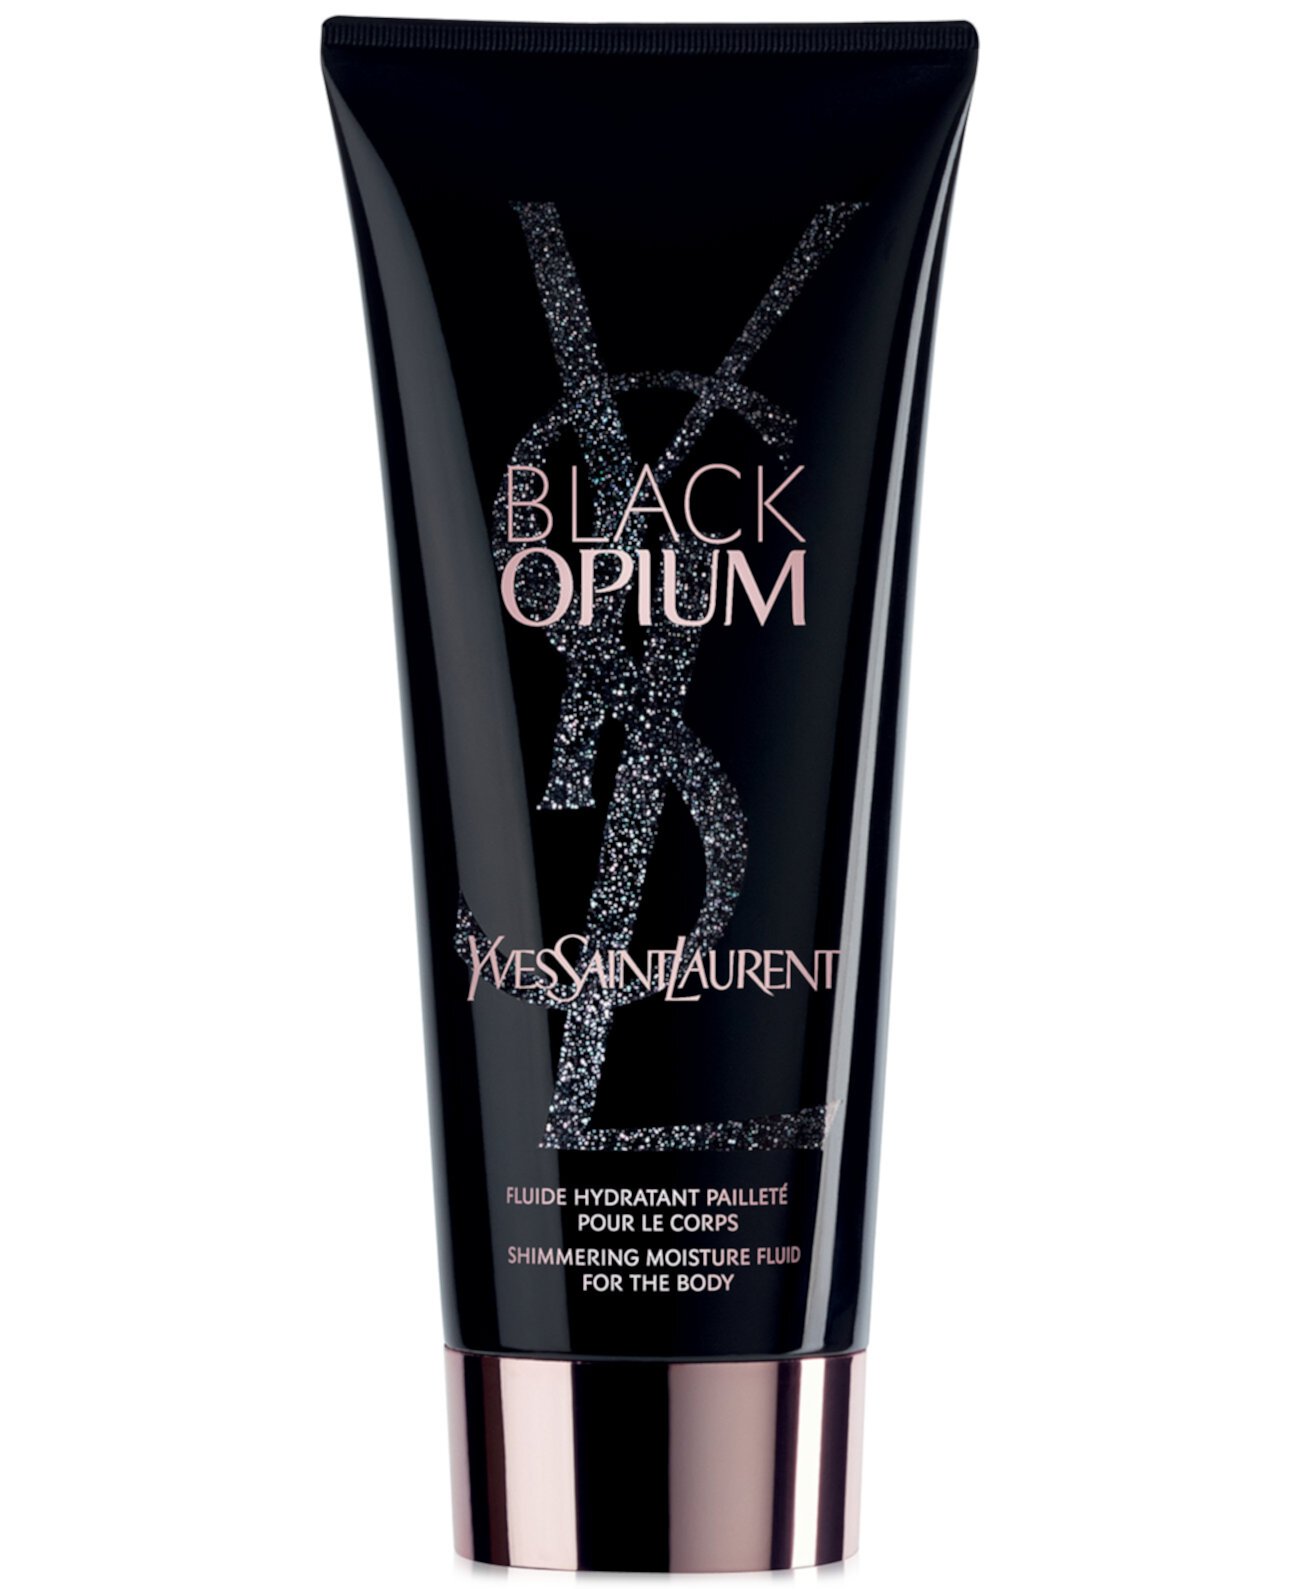 Увлажняющий флюид Black Opium, 6,6 унции Yves Saint Laurent